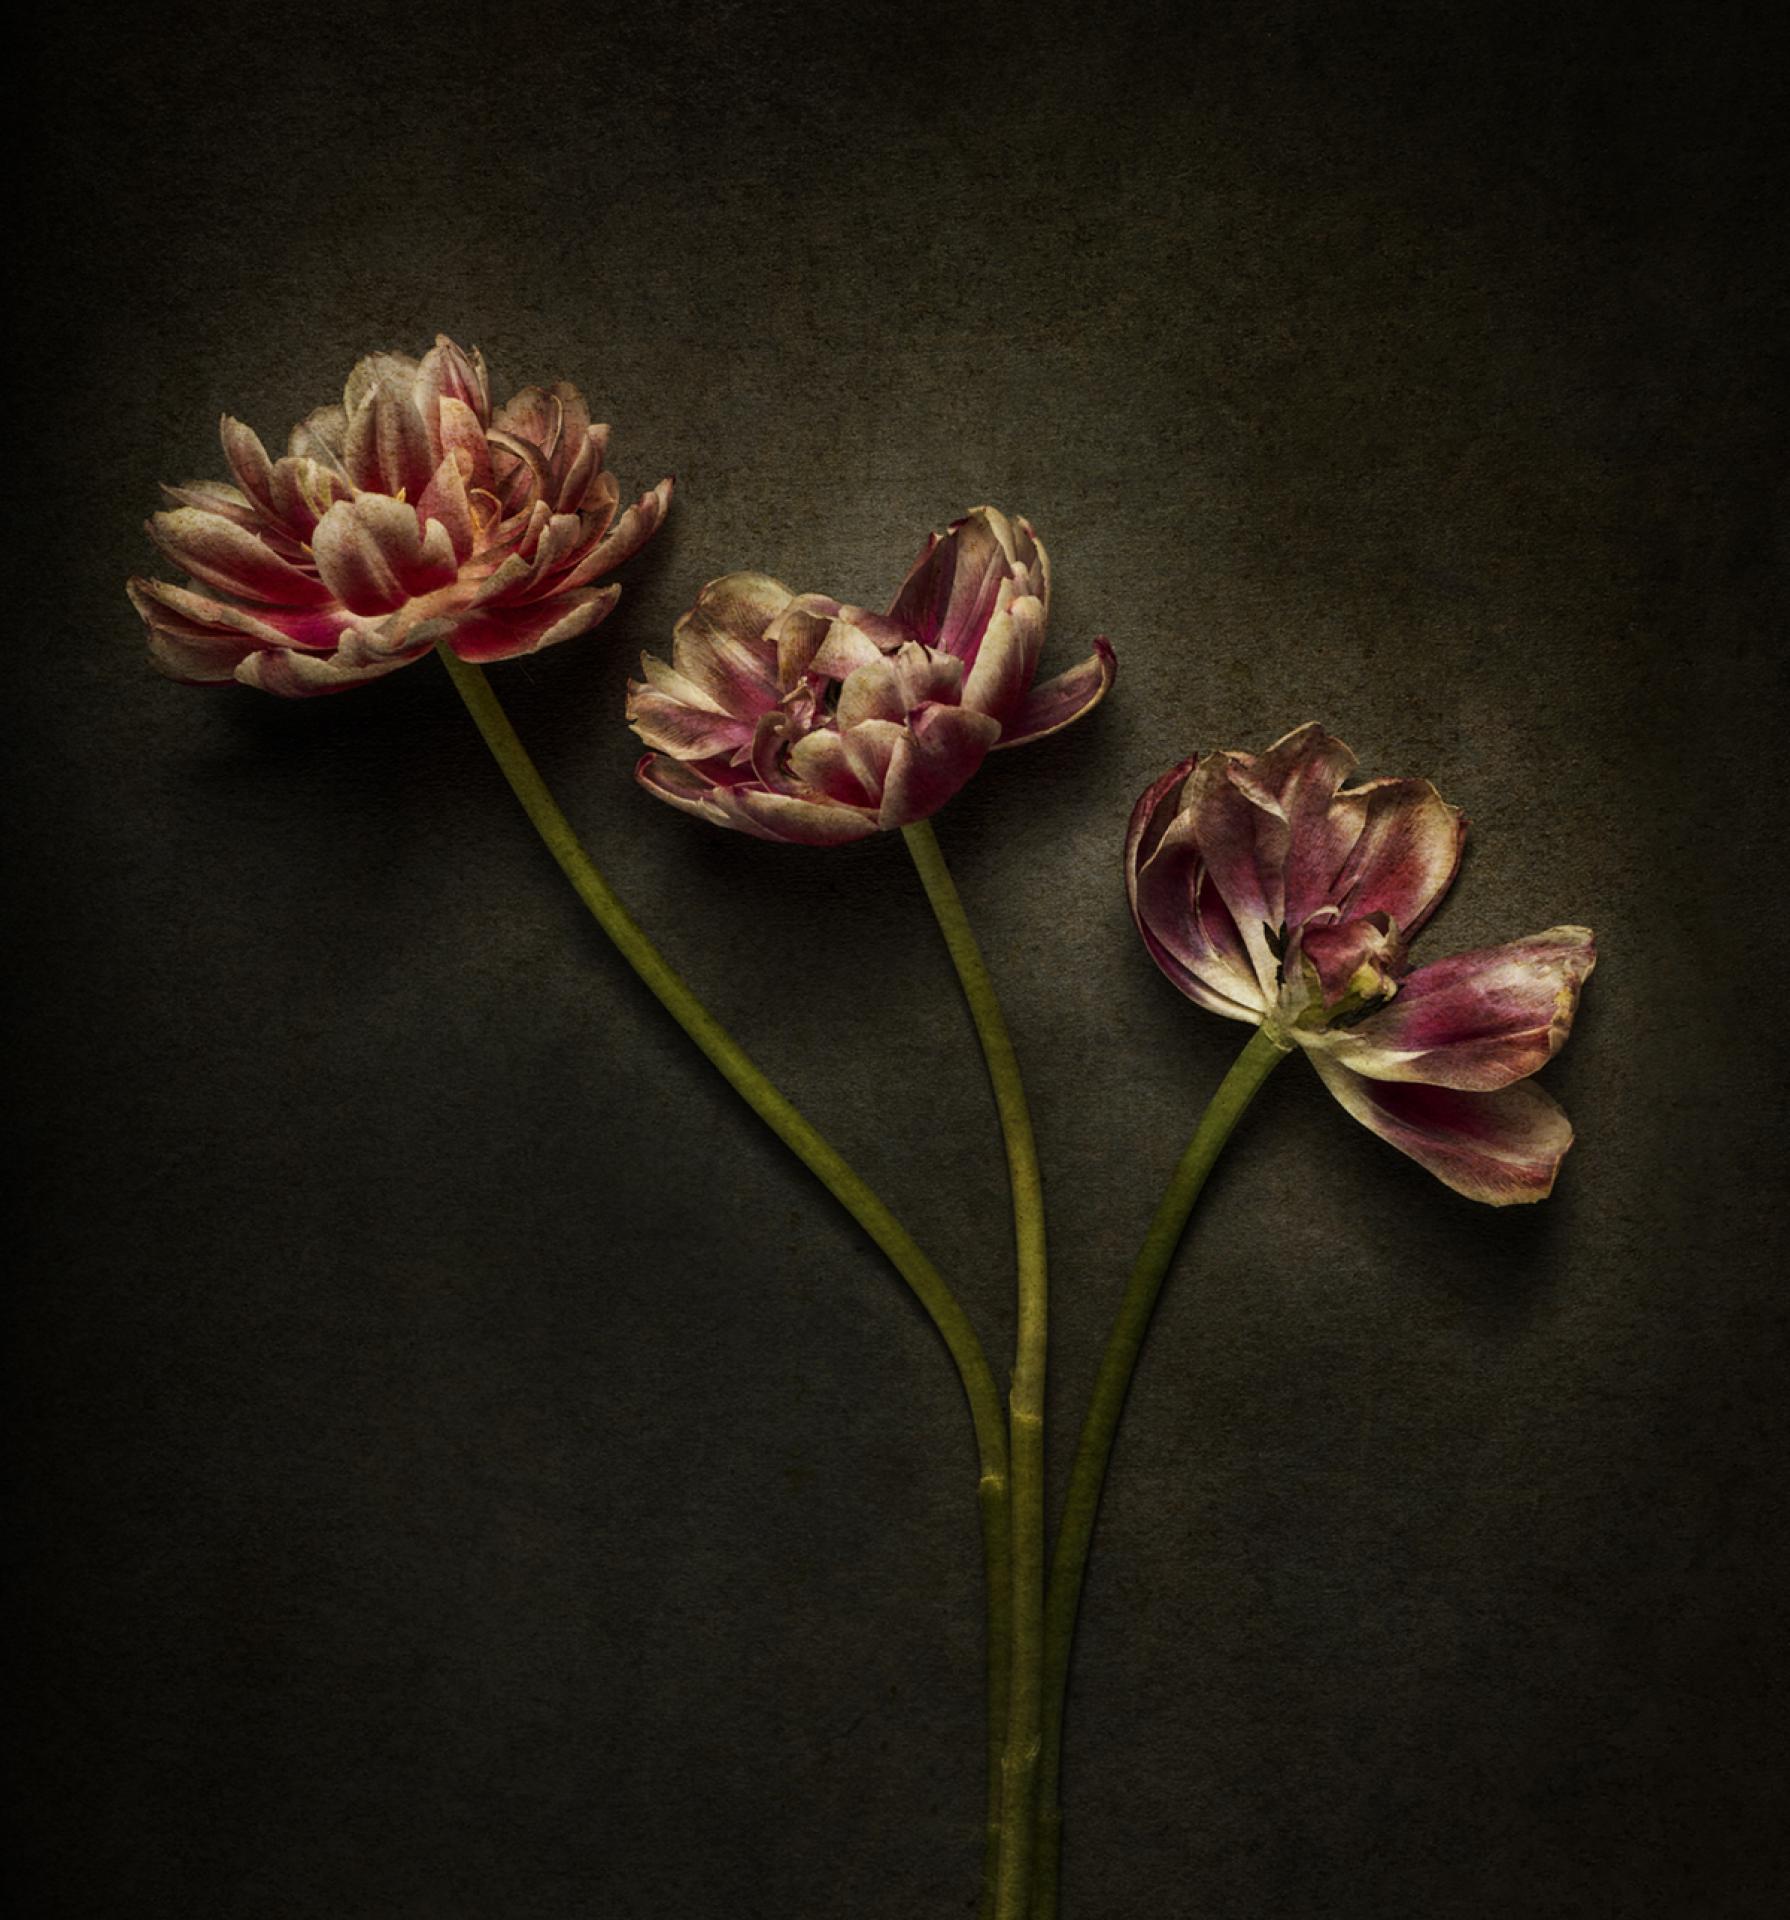 European Photography Awards Winner - Tulipes